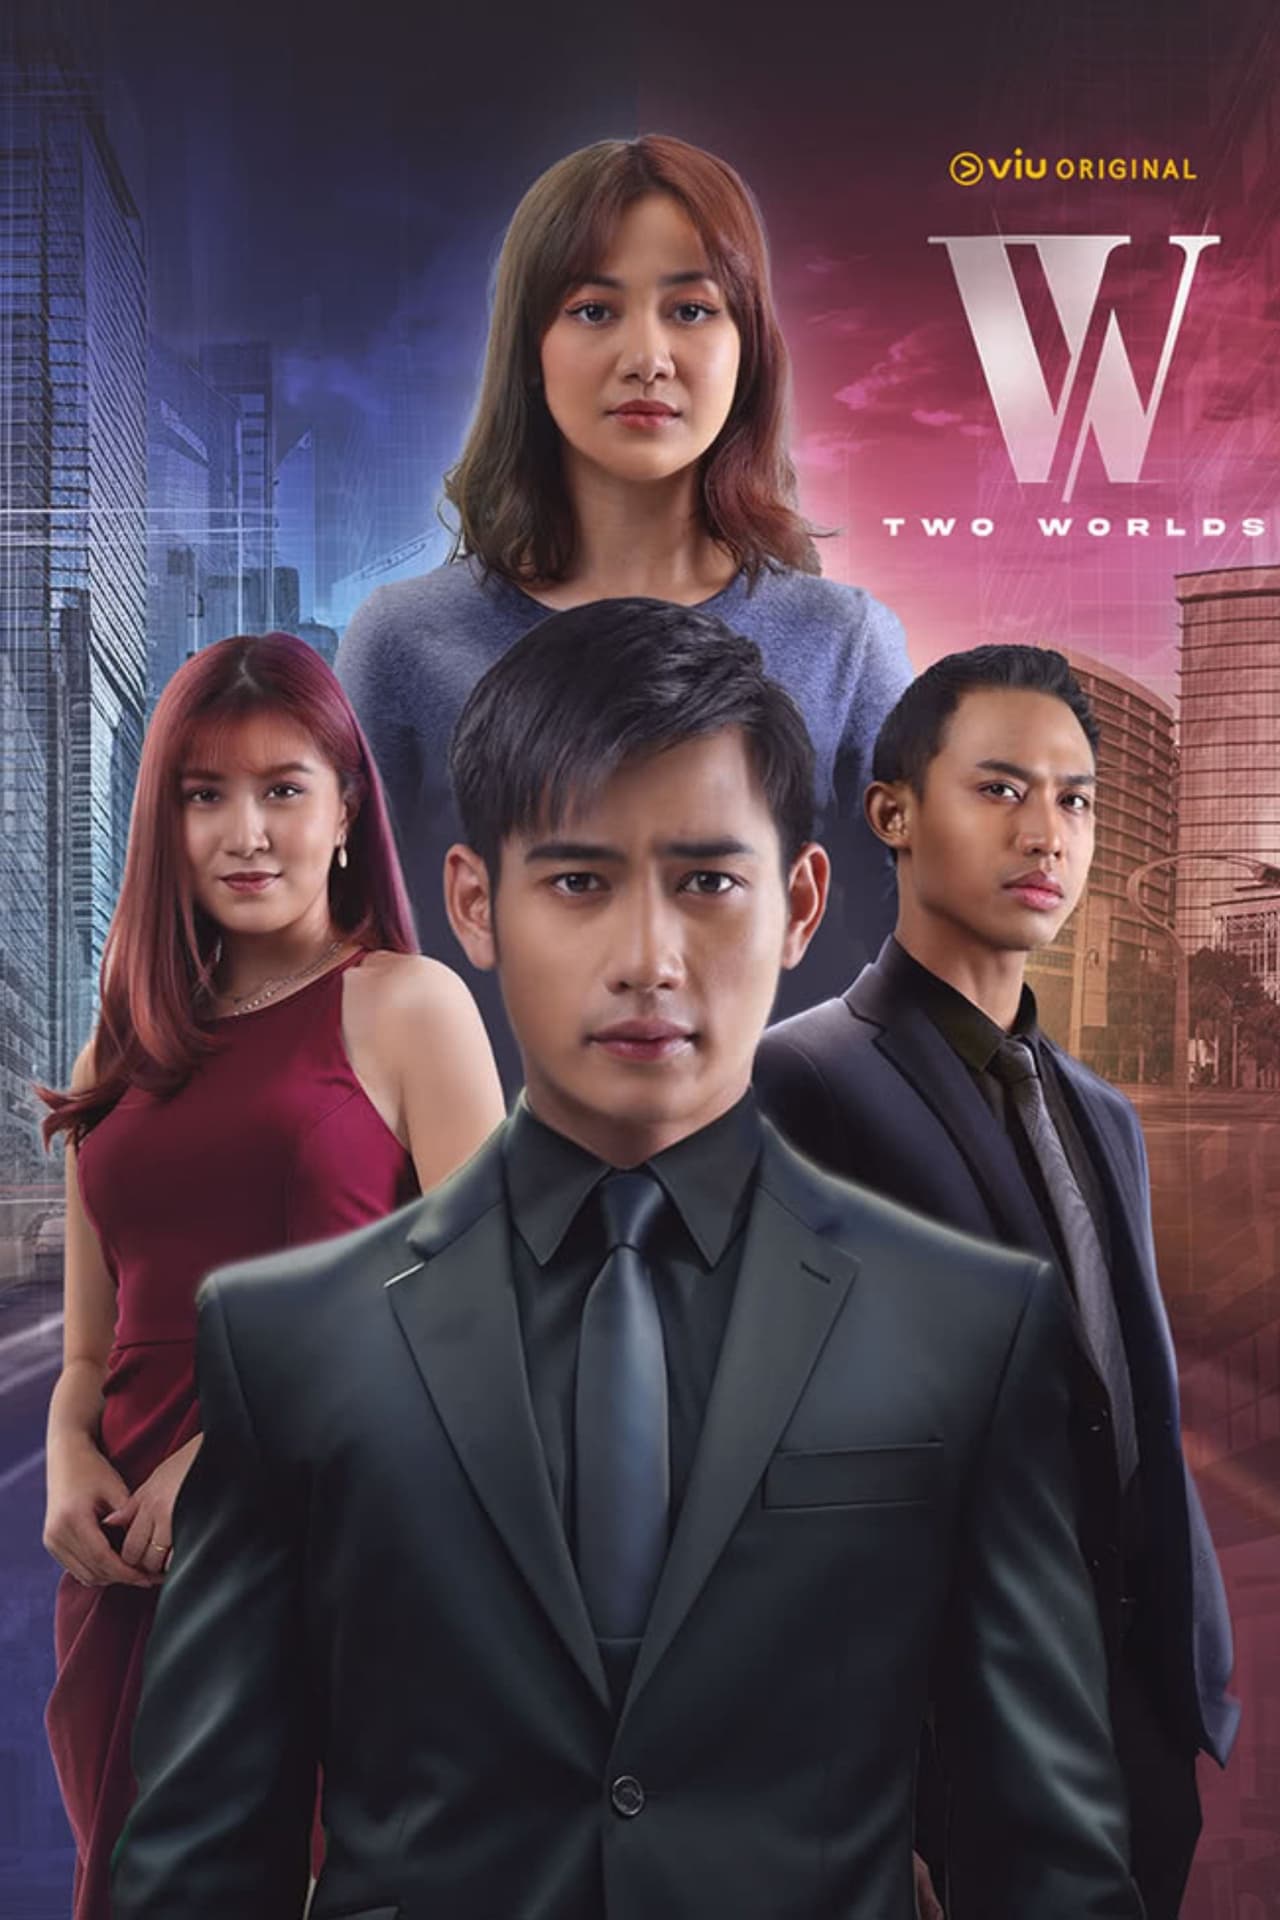 W: Two Worlds (Malaysia). Episode 1 of Season 1.